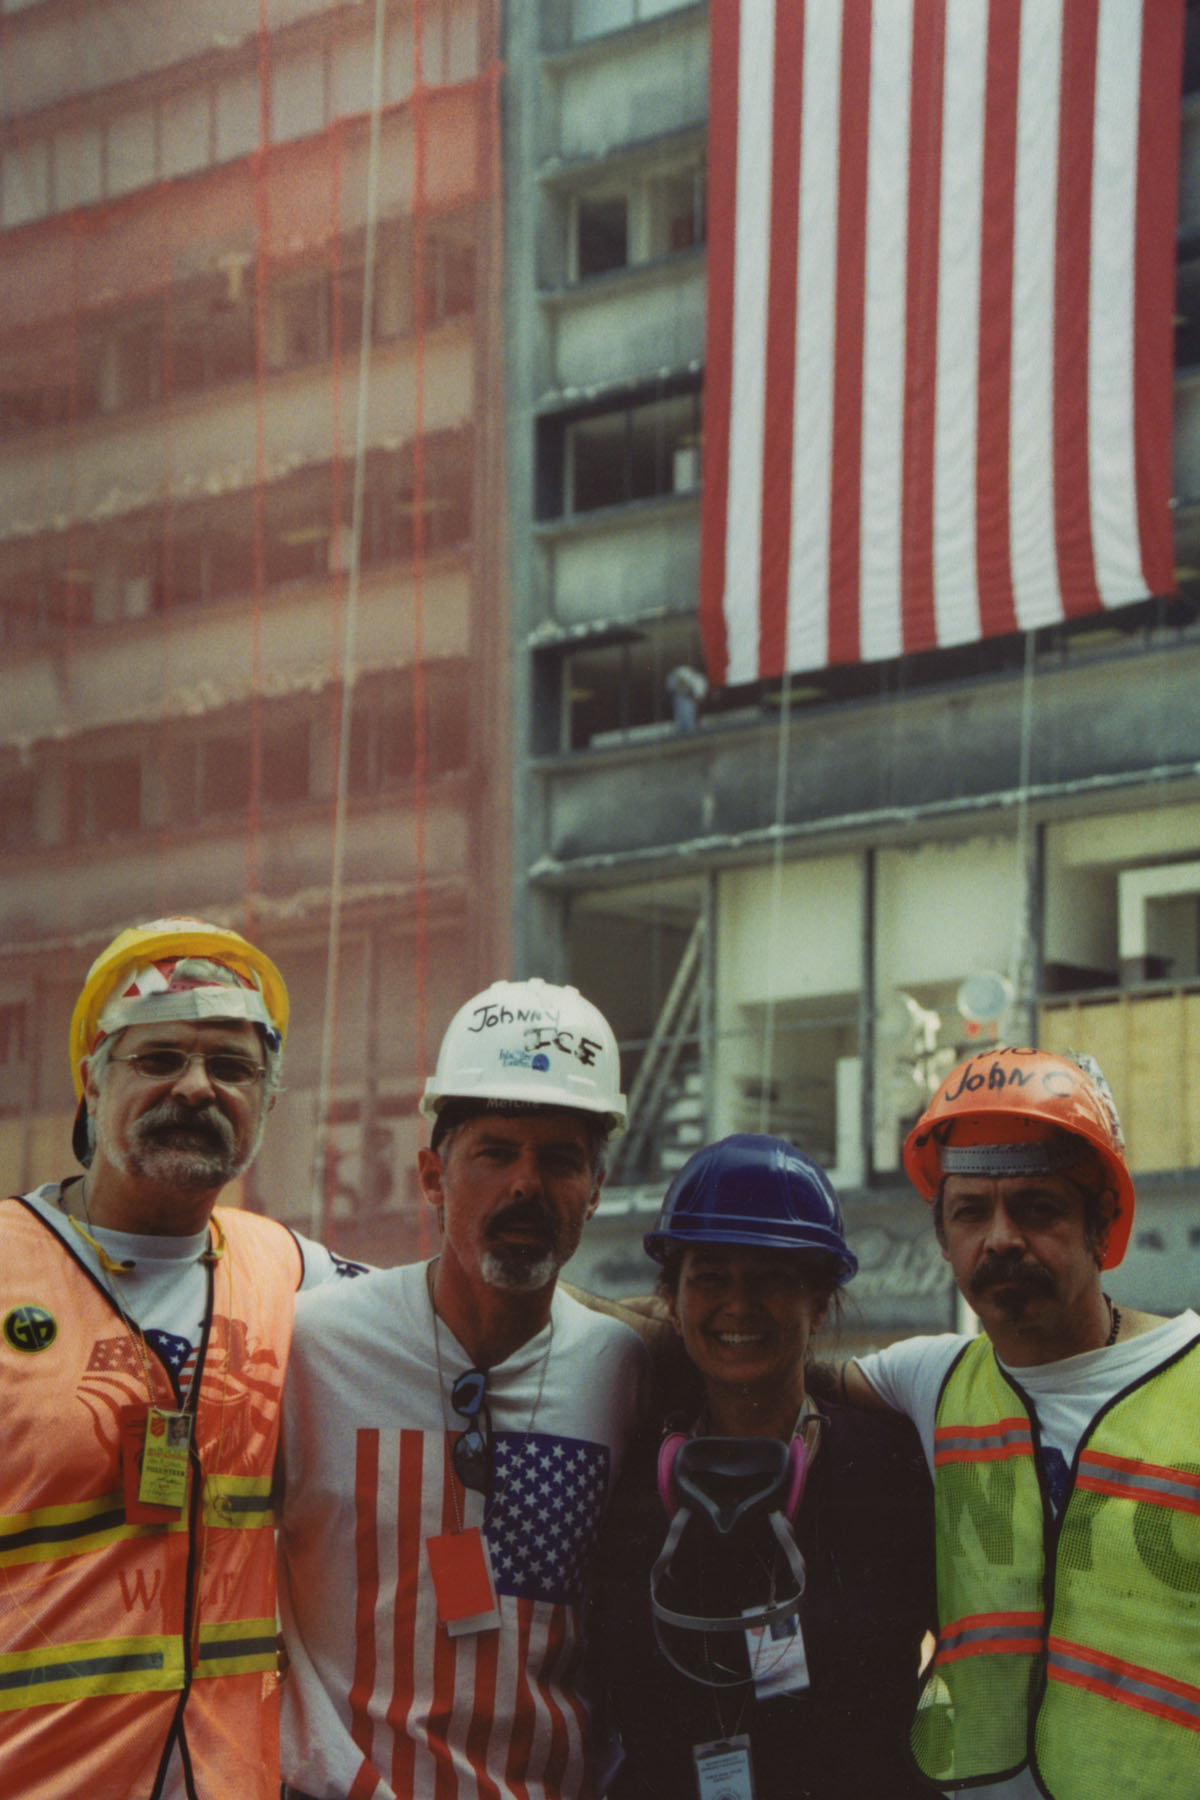 New Yorkers within Ground Zero